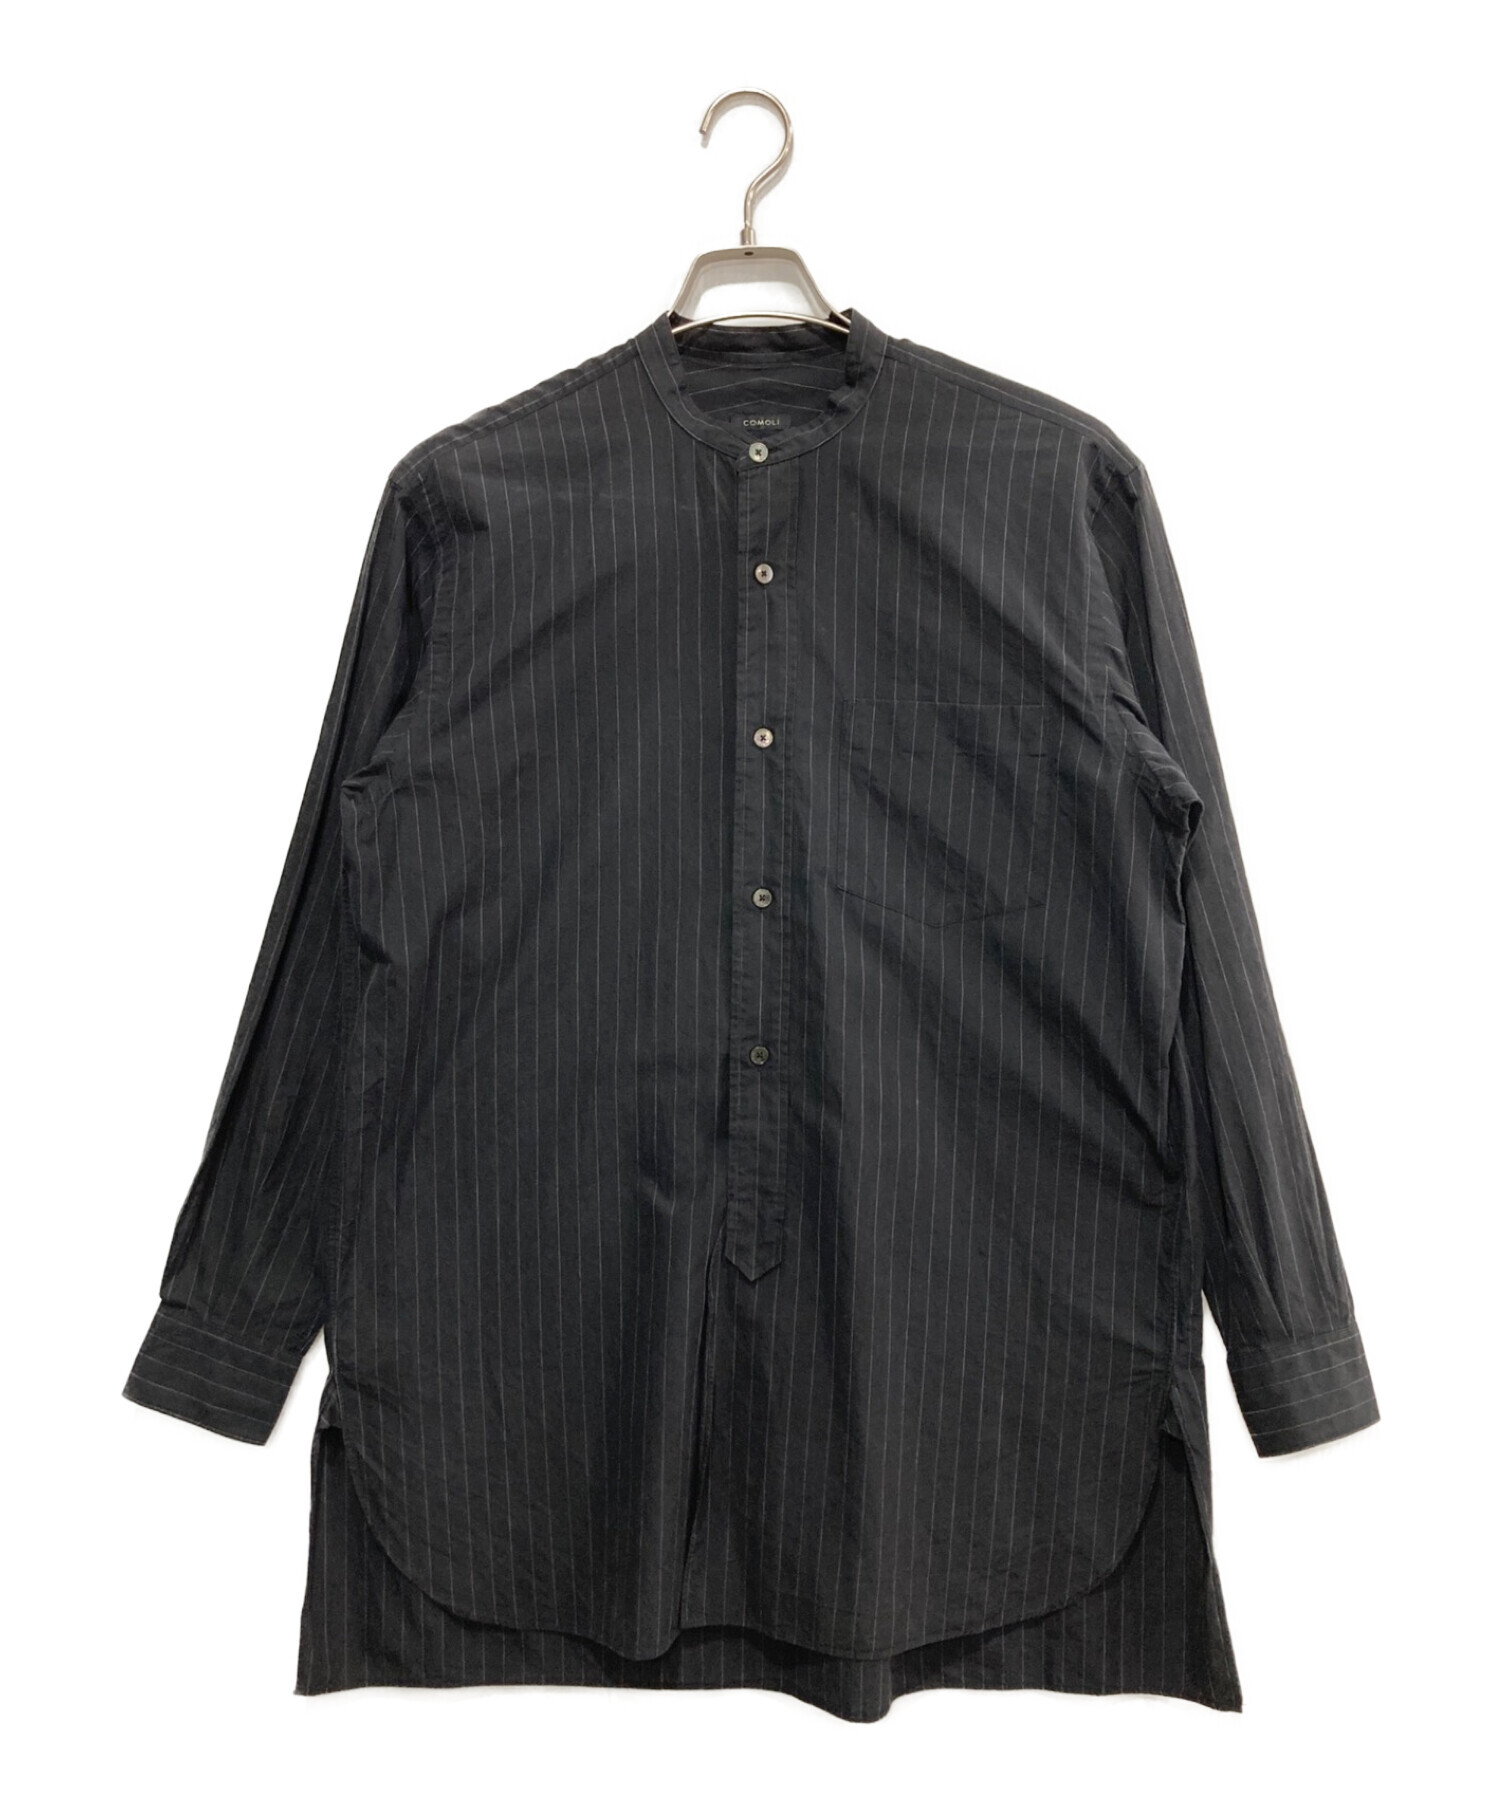 COMOLI(コモリ) バンドカラーシャツ CHALK STRIPE メンズ 2 古着 0210